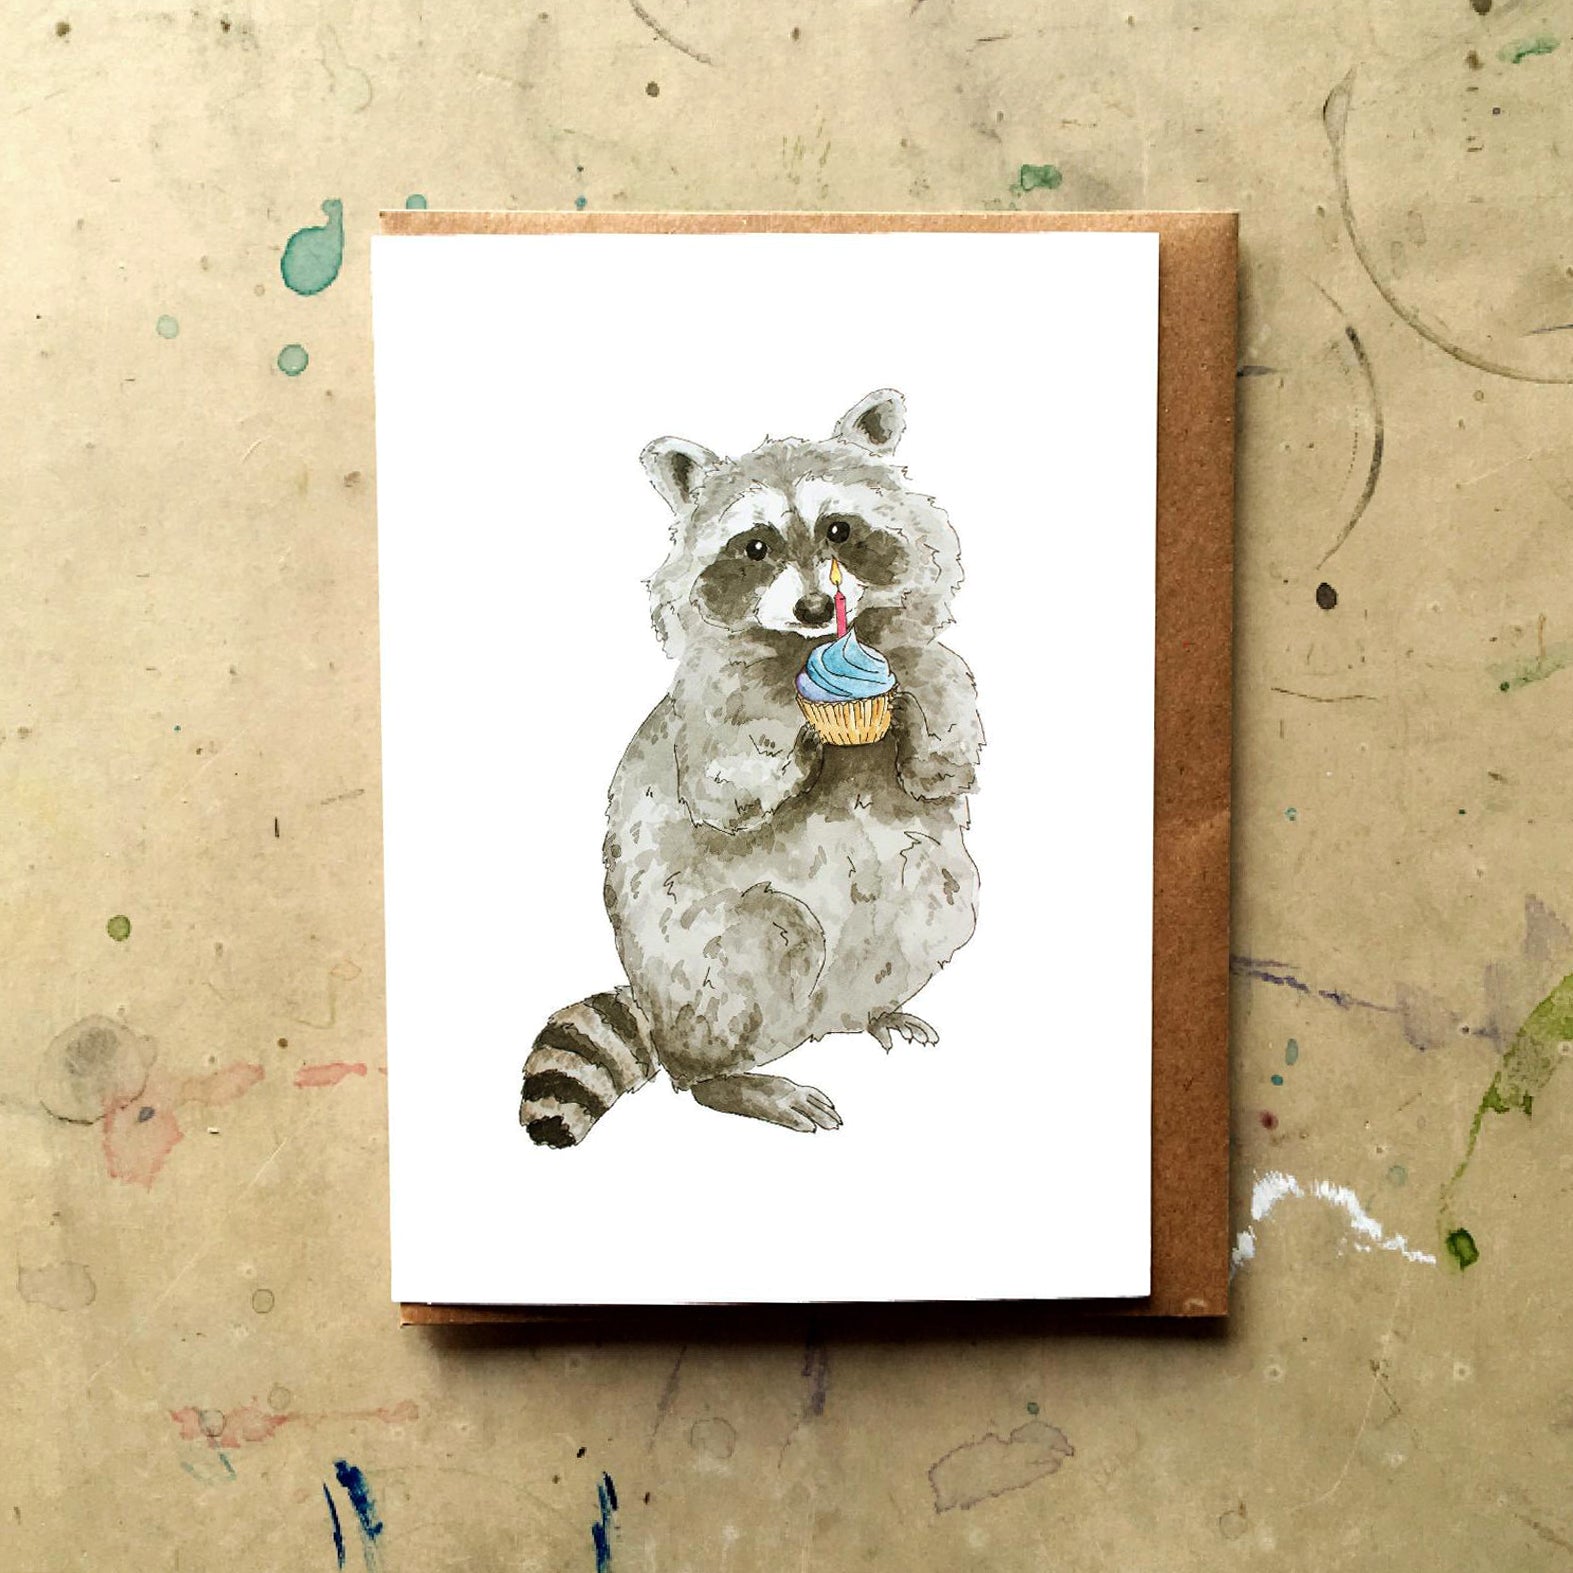 Birthday Raccoon Card